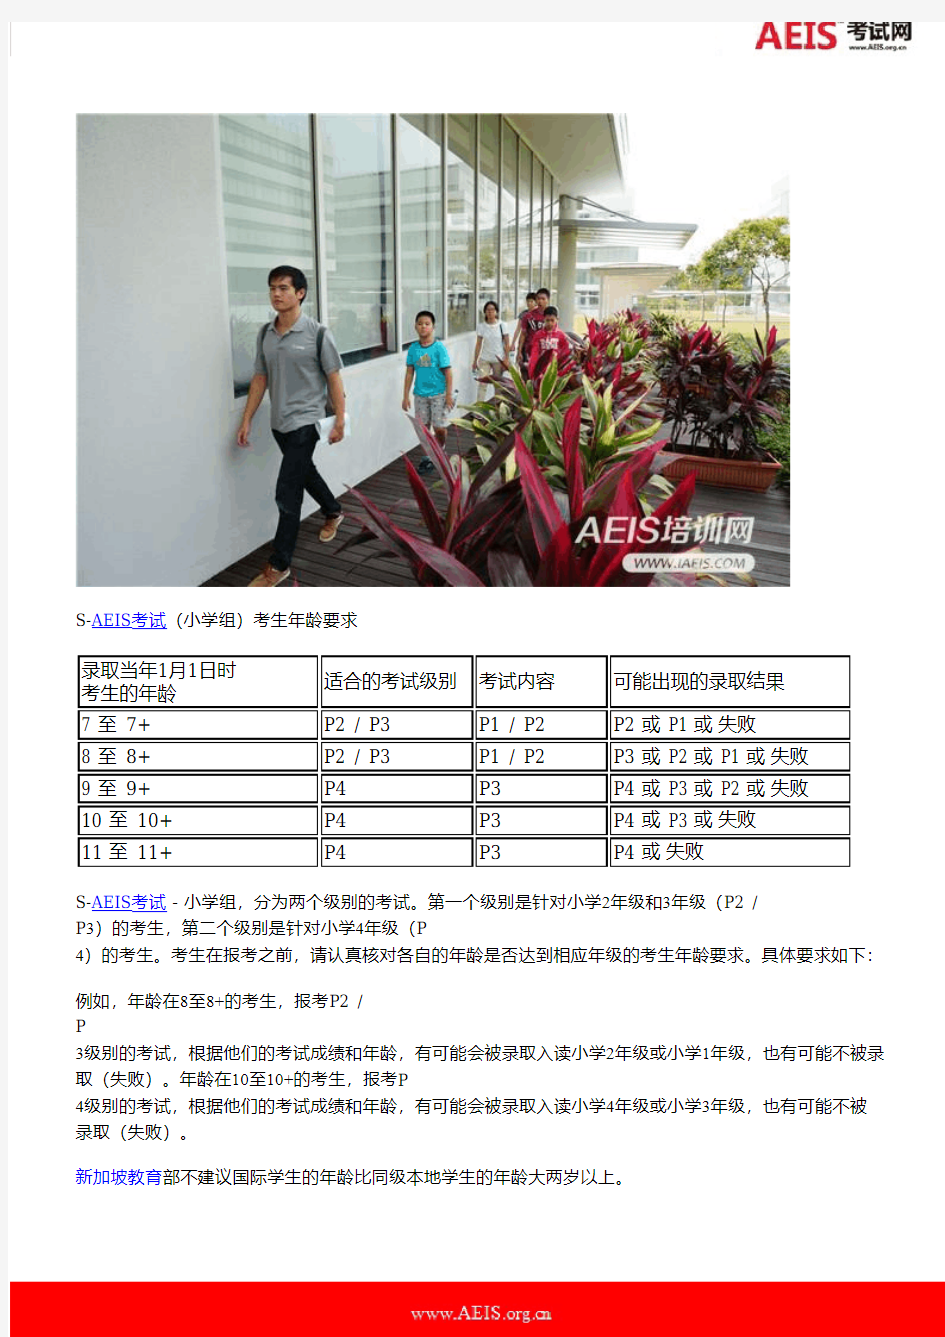 S-AEIS考试小学组报名要求 - 上海AEIS考试培训